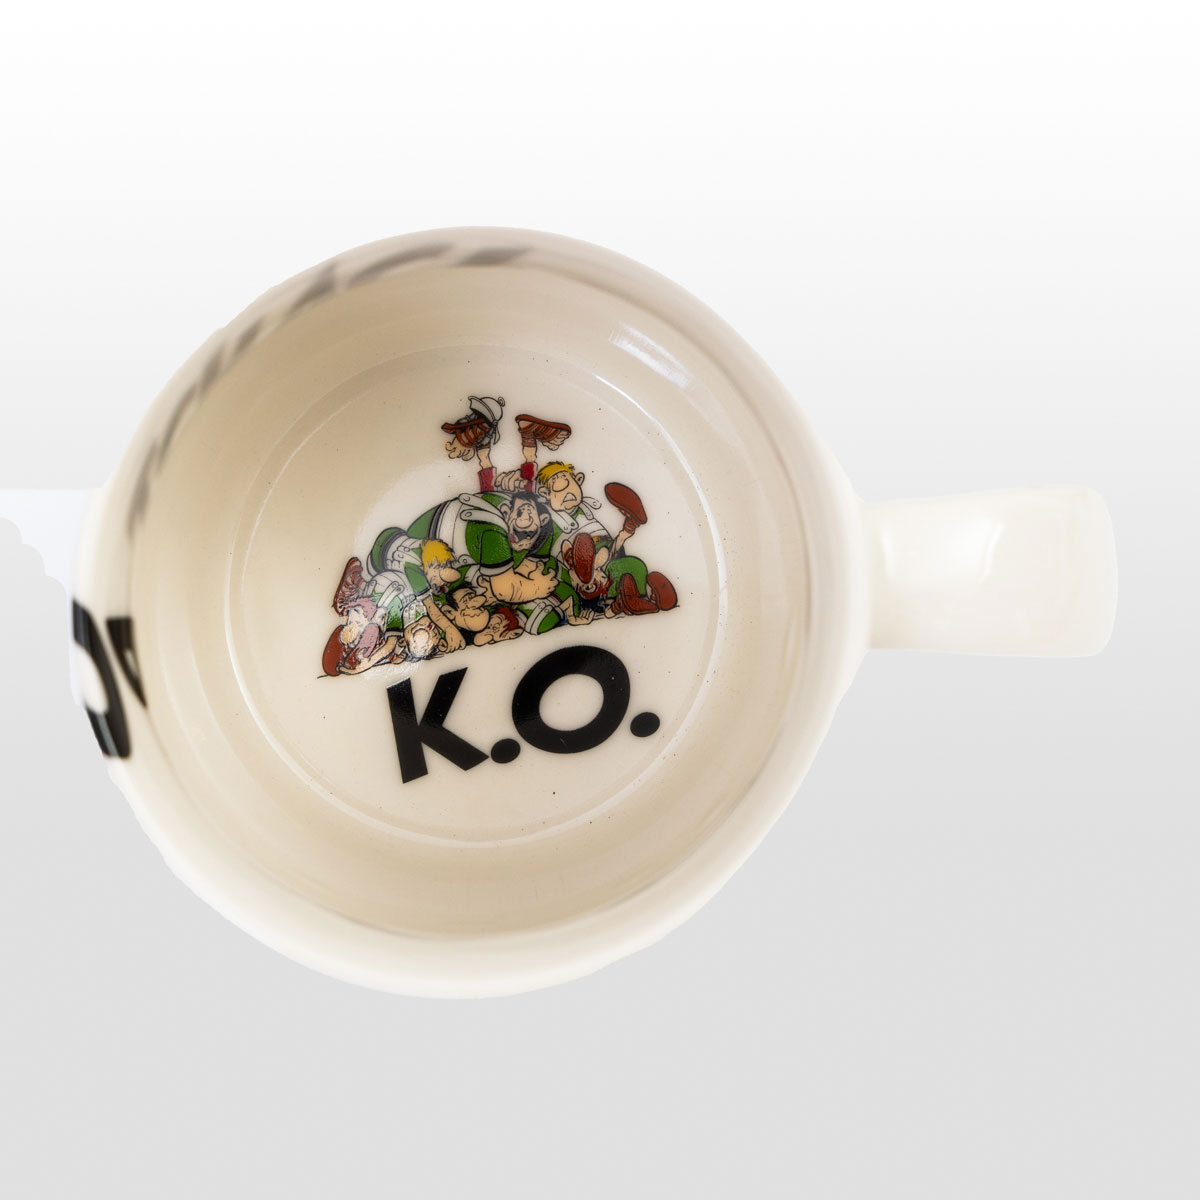 Uderzo mug : Asterix and Obelix : K.O. (detail 3)